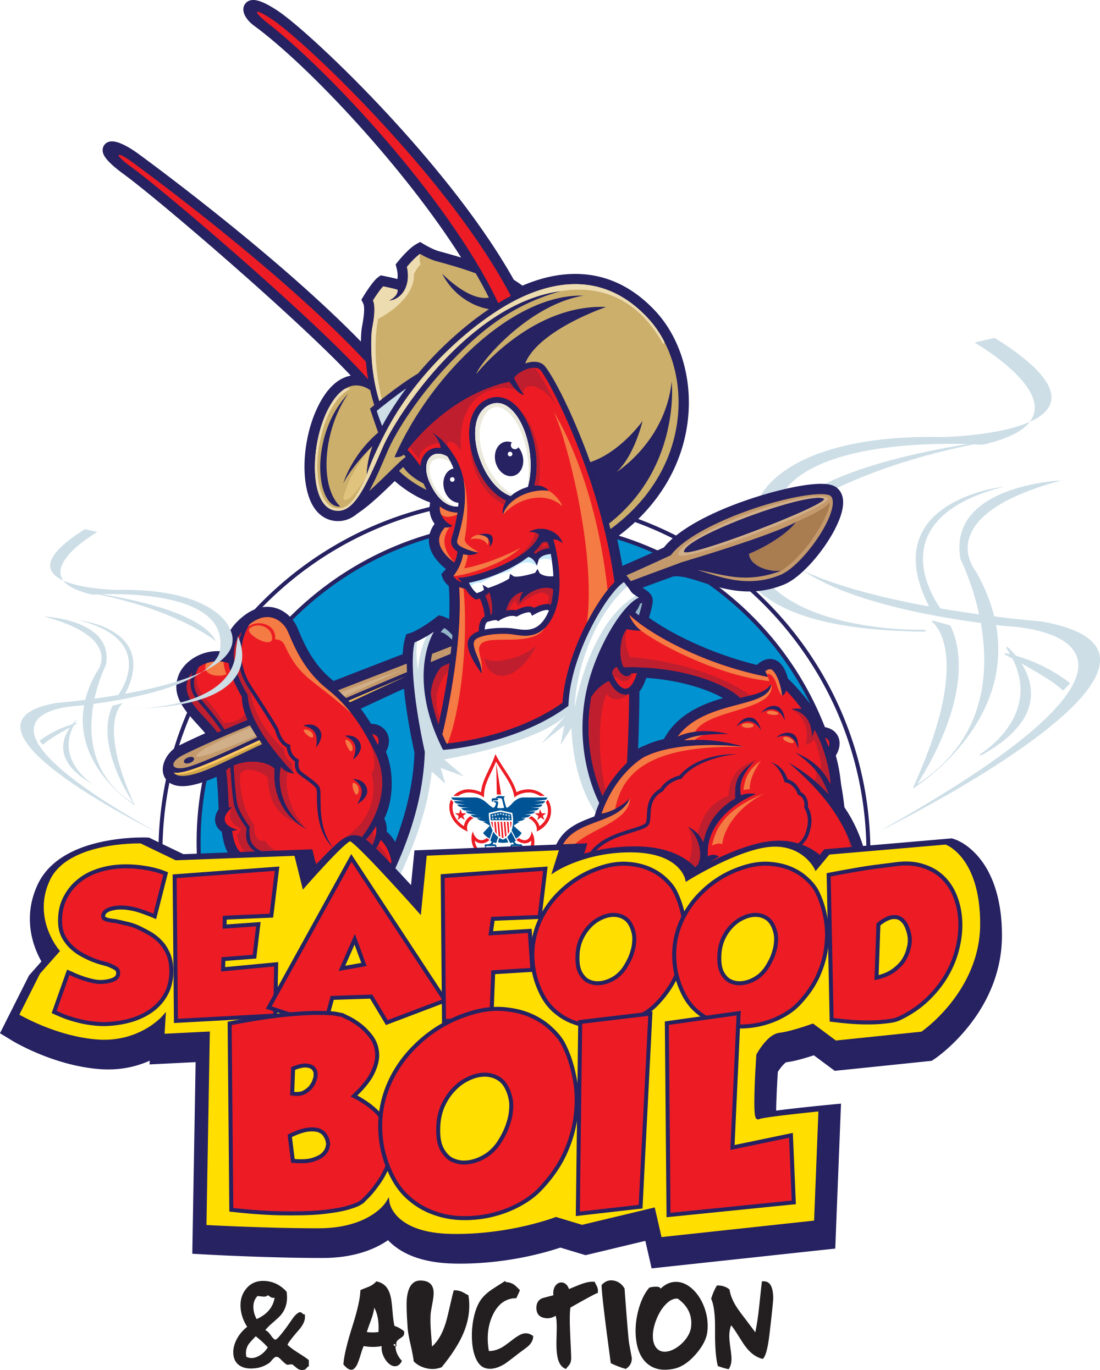 boy scouts seafood boil event logo design